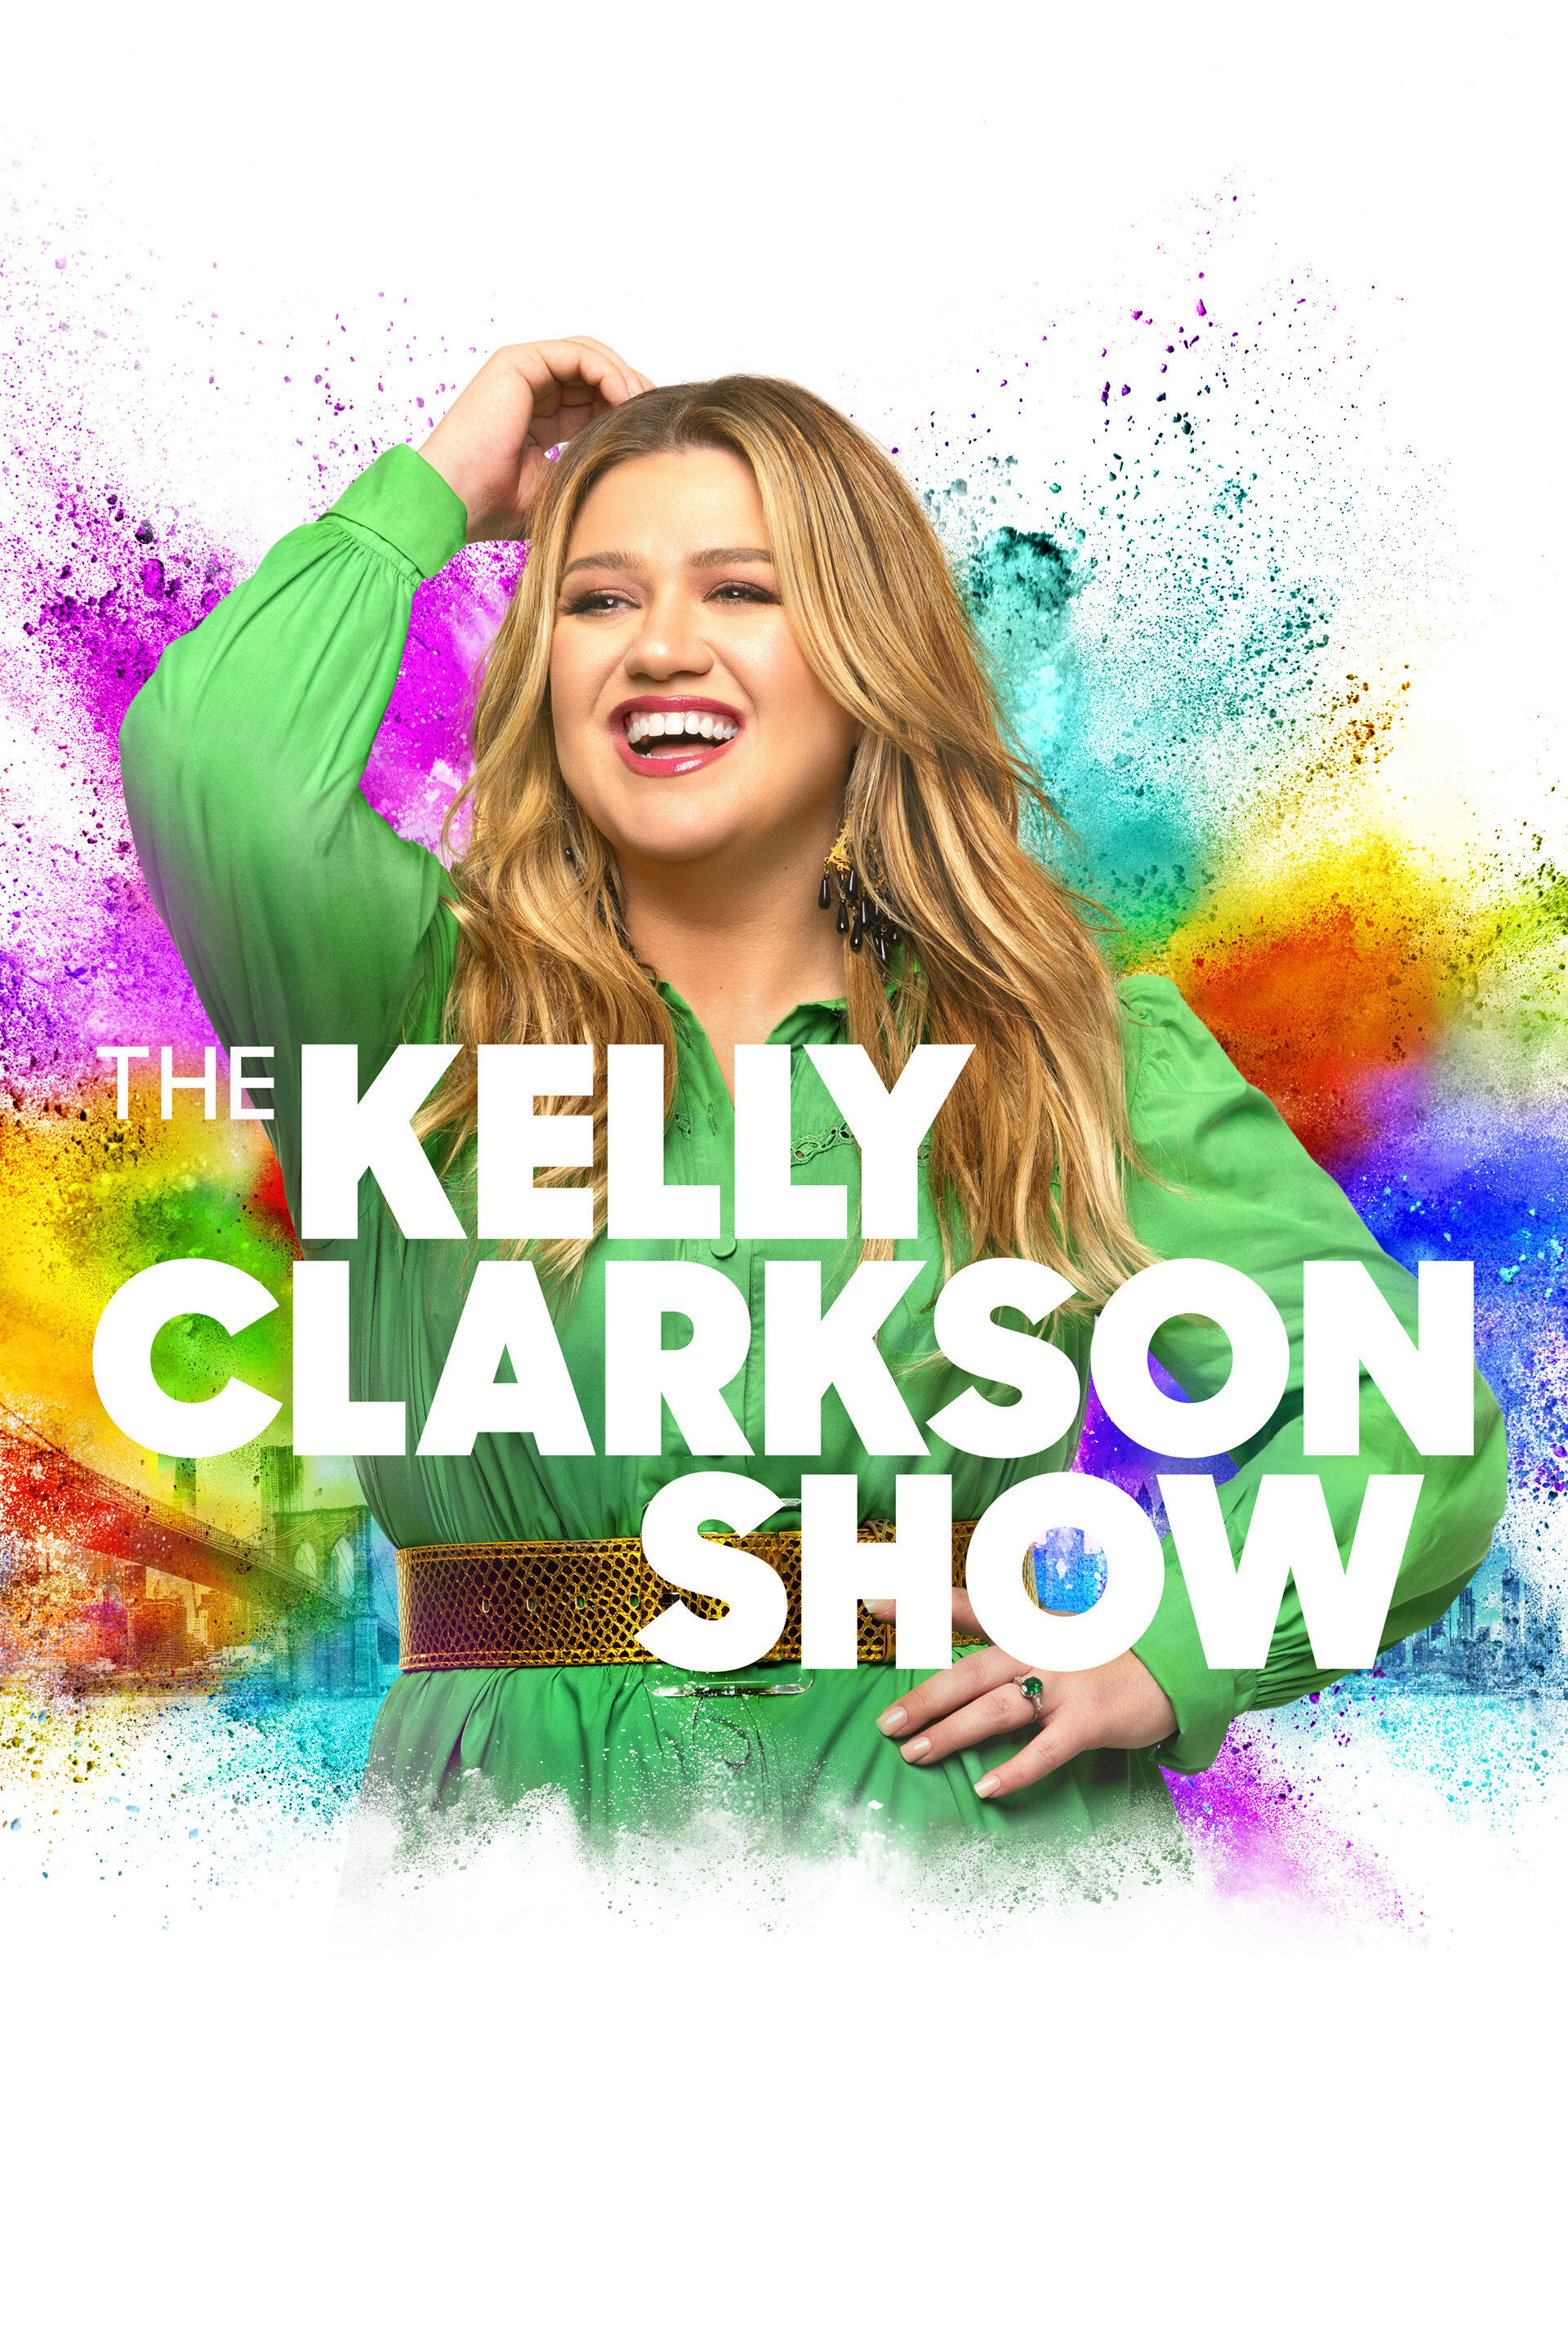 The Kelly Clarkson Show ne zaman